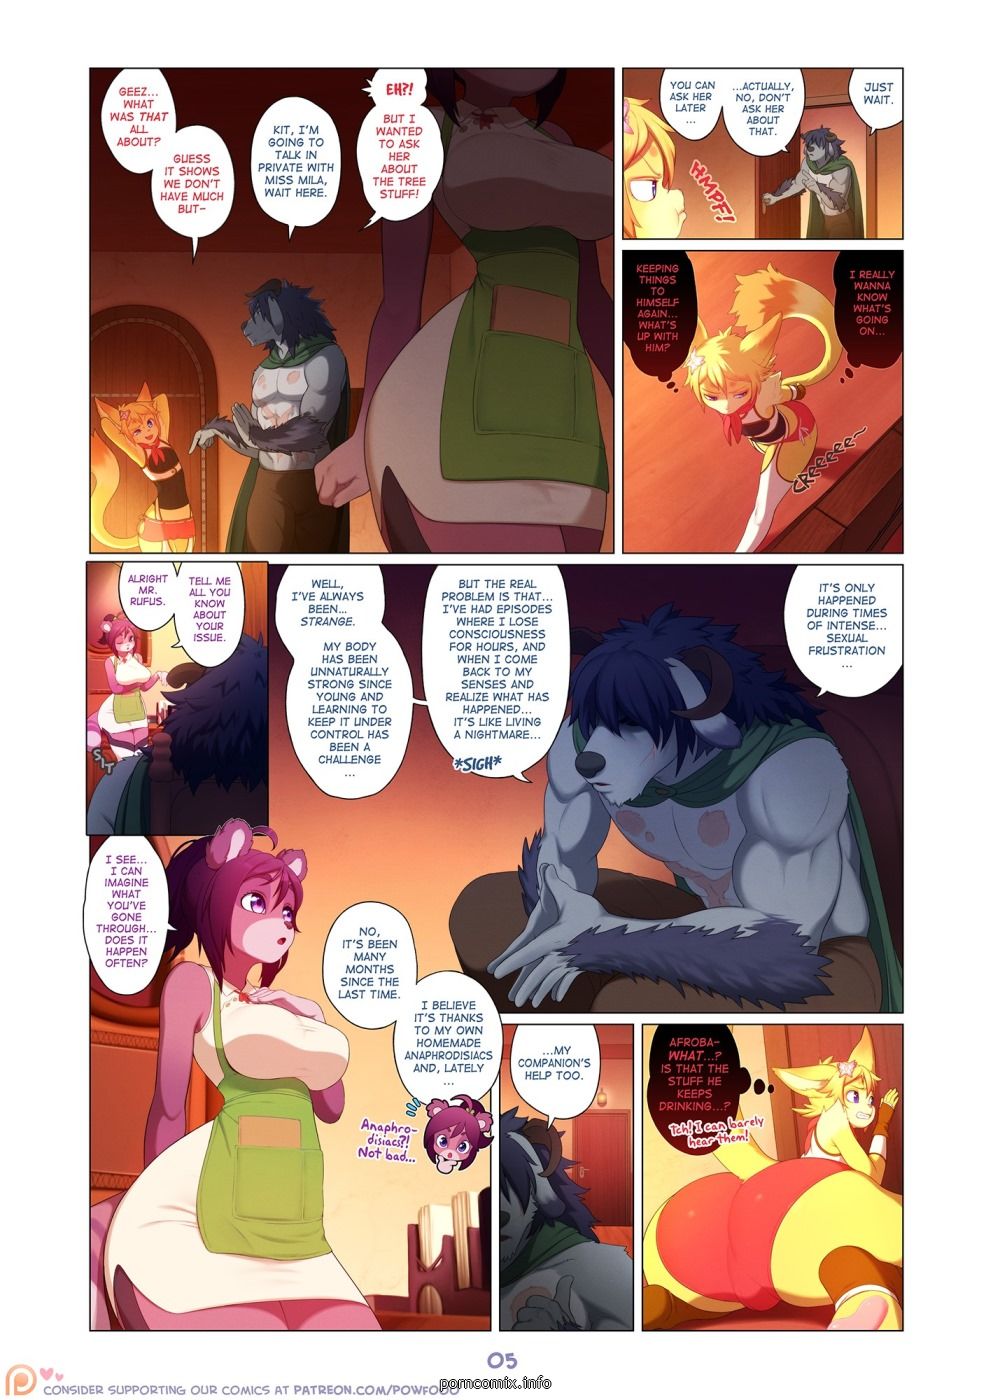 [Powfooo] Arcana Tales Chapter 2 page 4